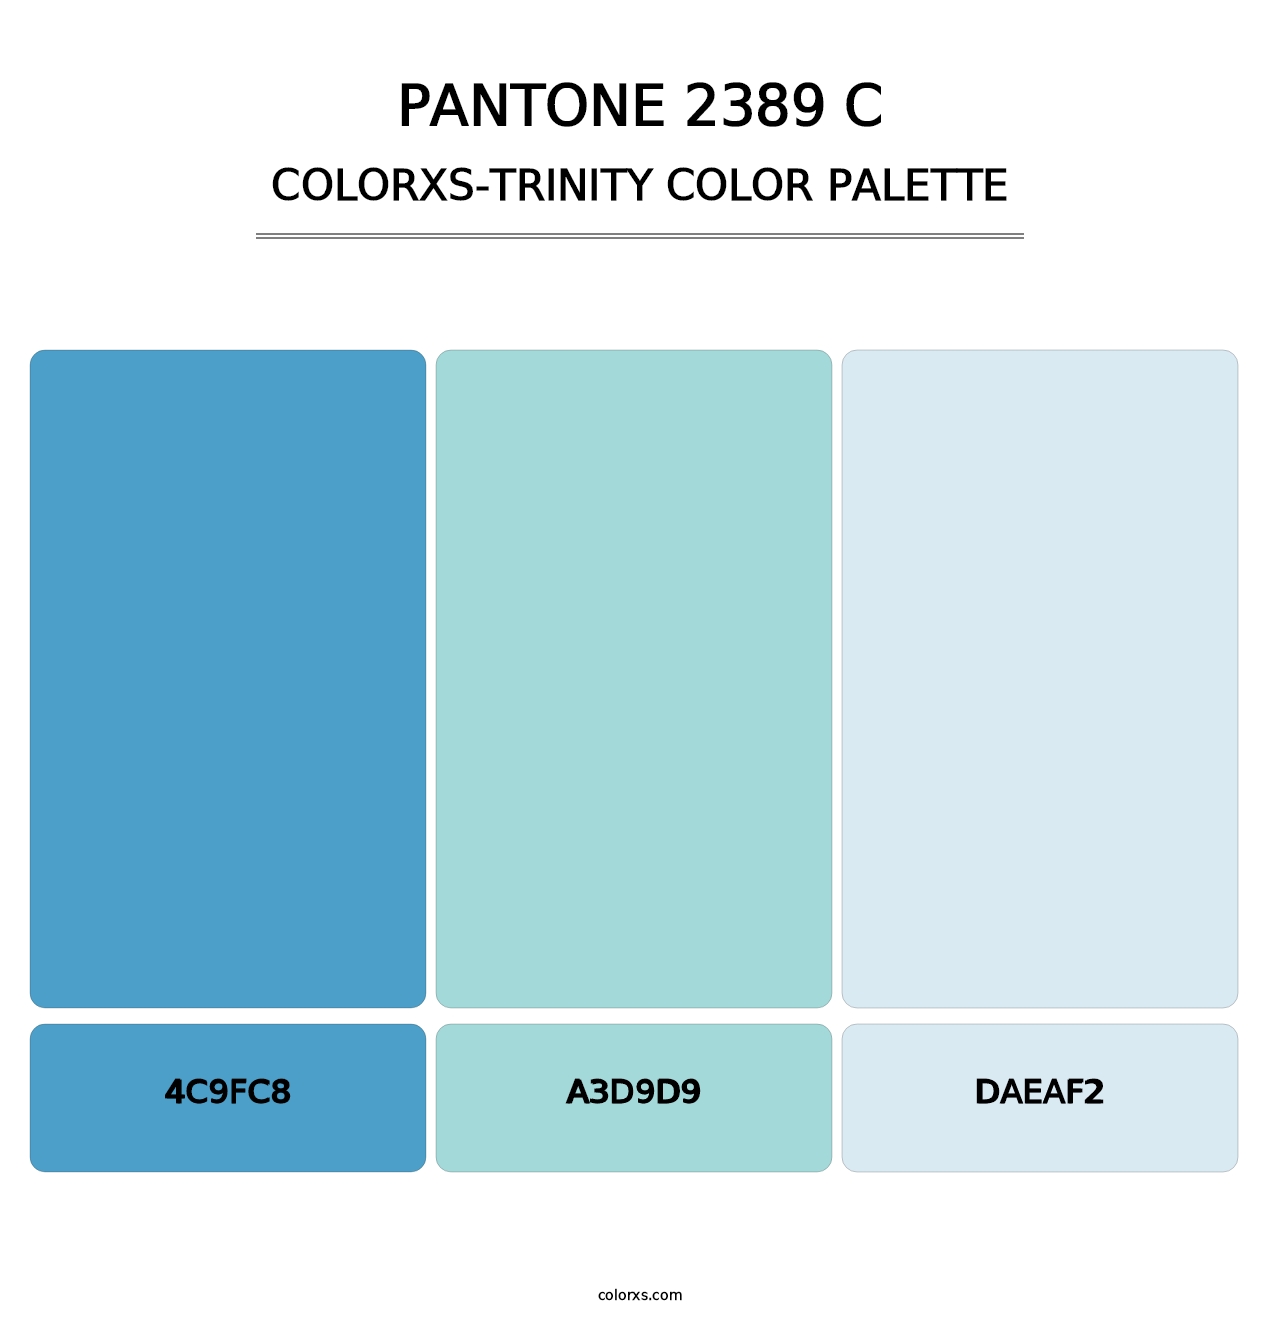 PANTONE 2389 C - Colorxs Trinity Palette